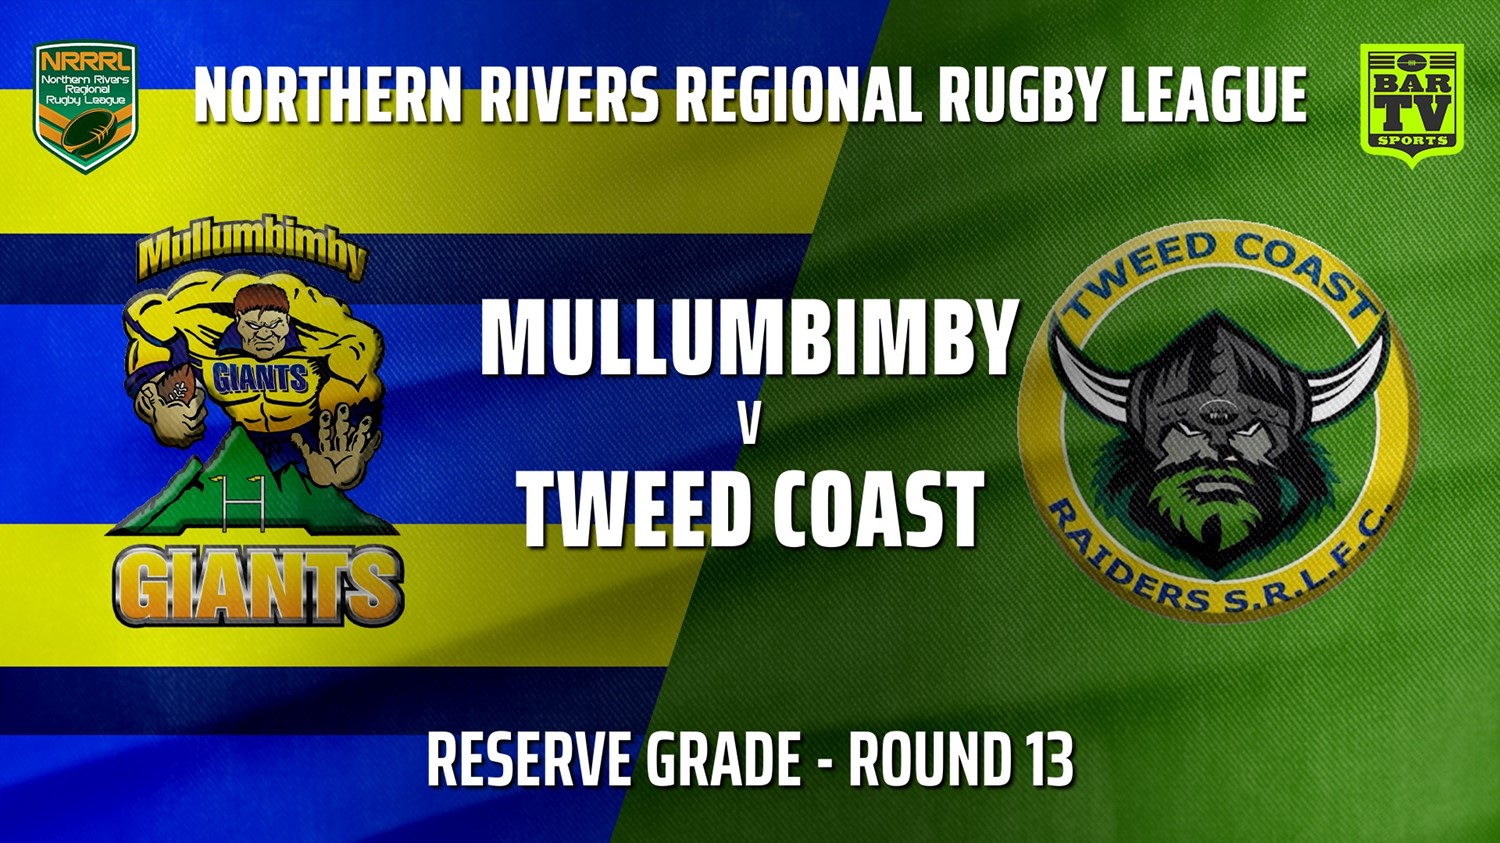 210801-Northern Rivers Round 13 - Reserve Grade - Mullumbimby Giants v Tweed Coast Raiders Slate Image